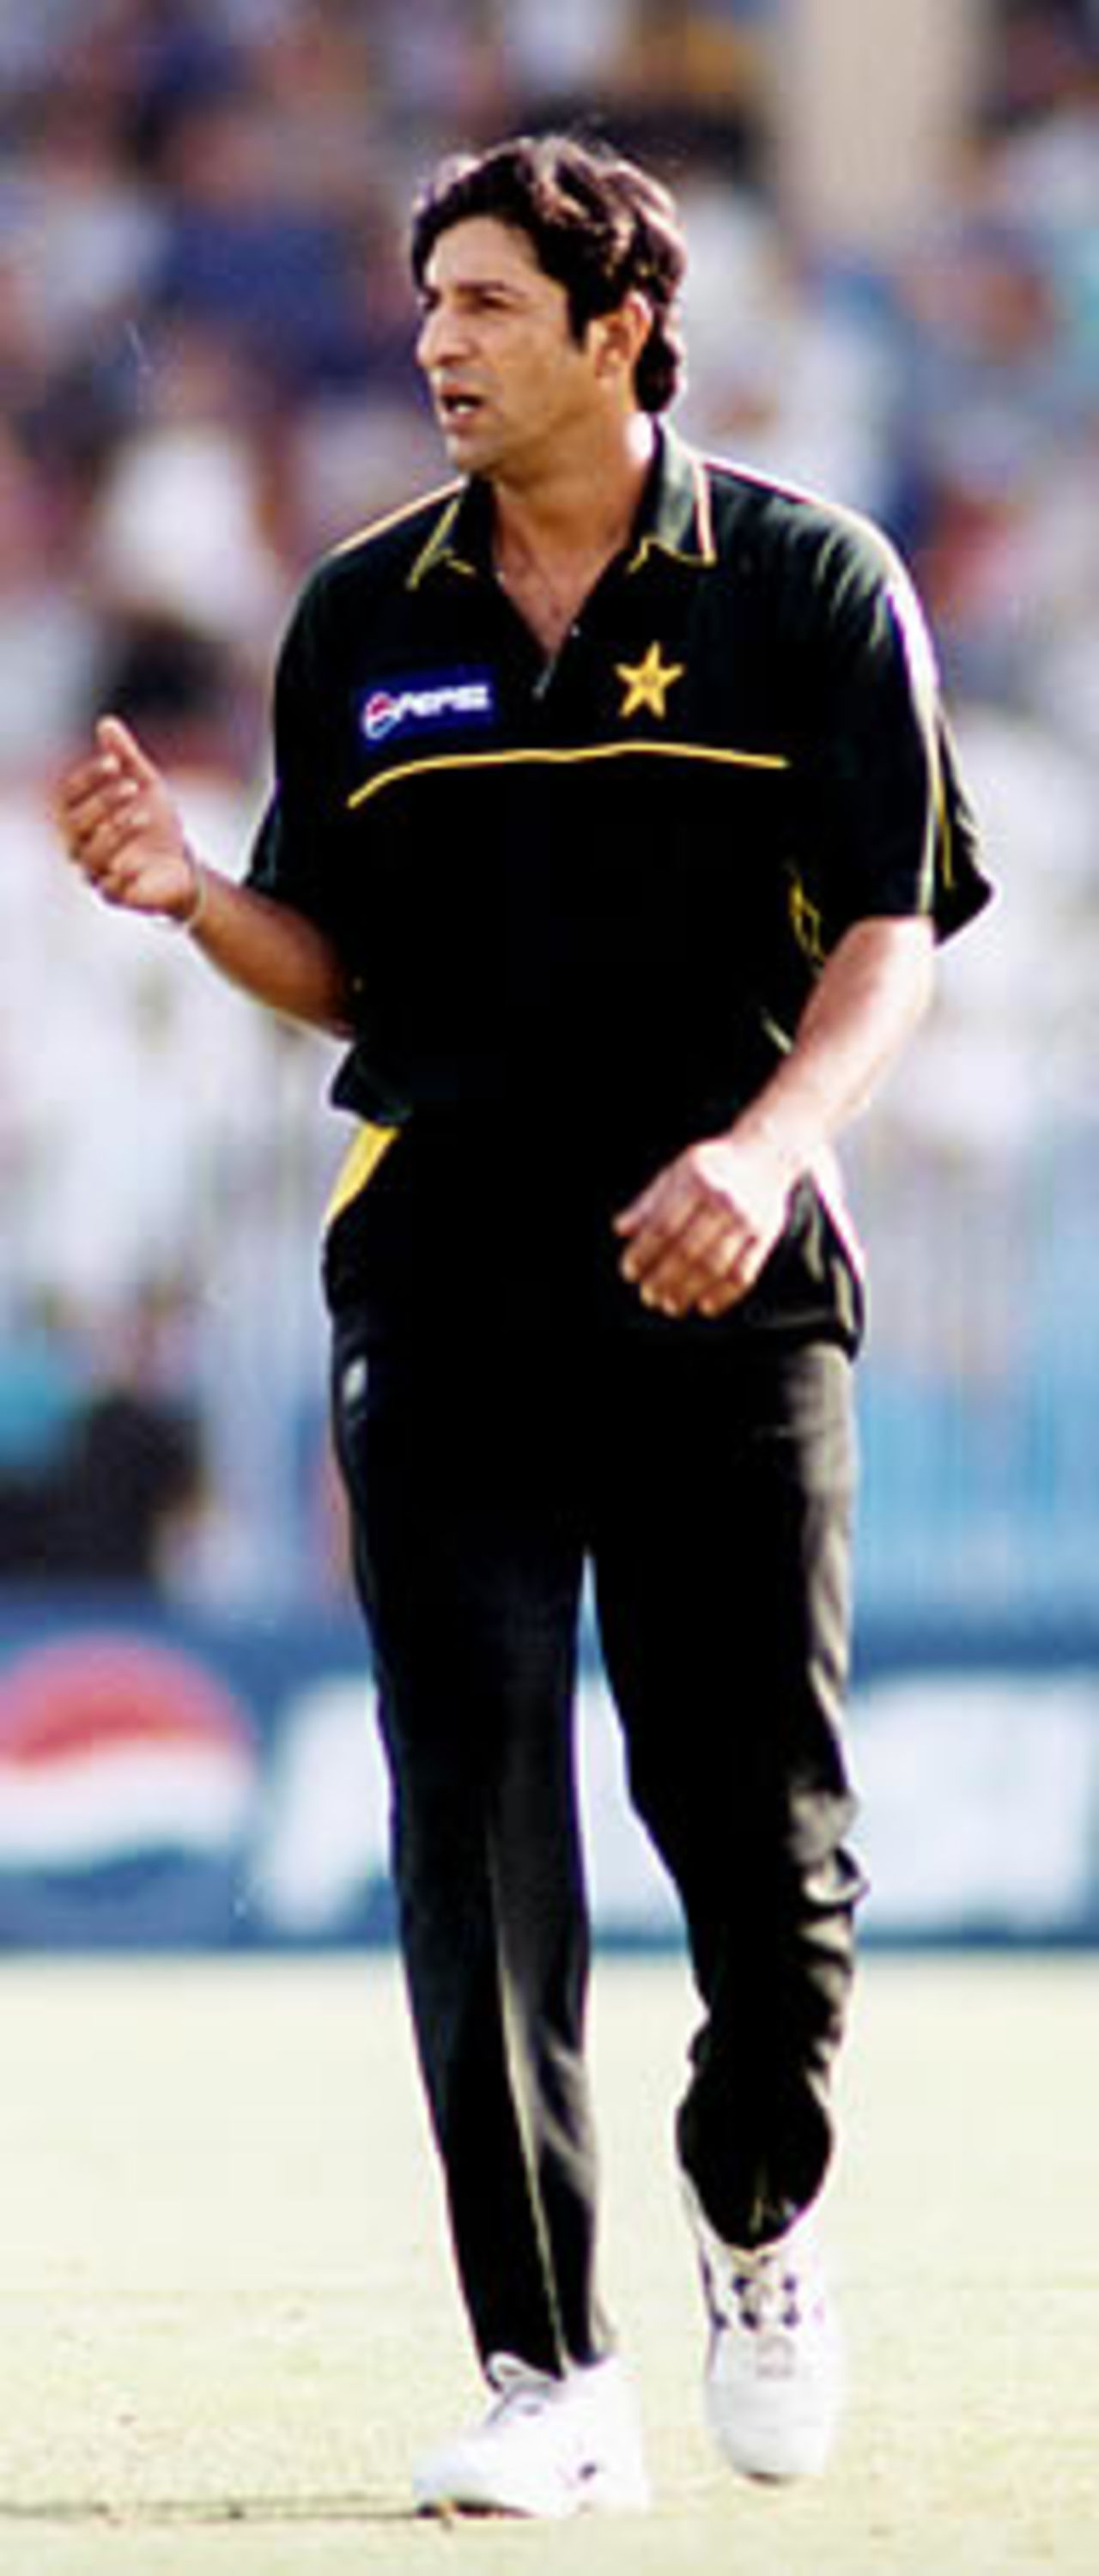 Wasim Akram getting ready to bowl - 2nd ODI at Rawalpindi, New Zealand v Pakistan, 24 Apr 2002